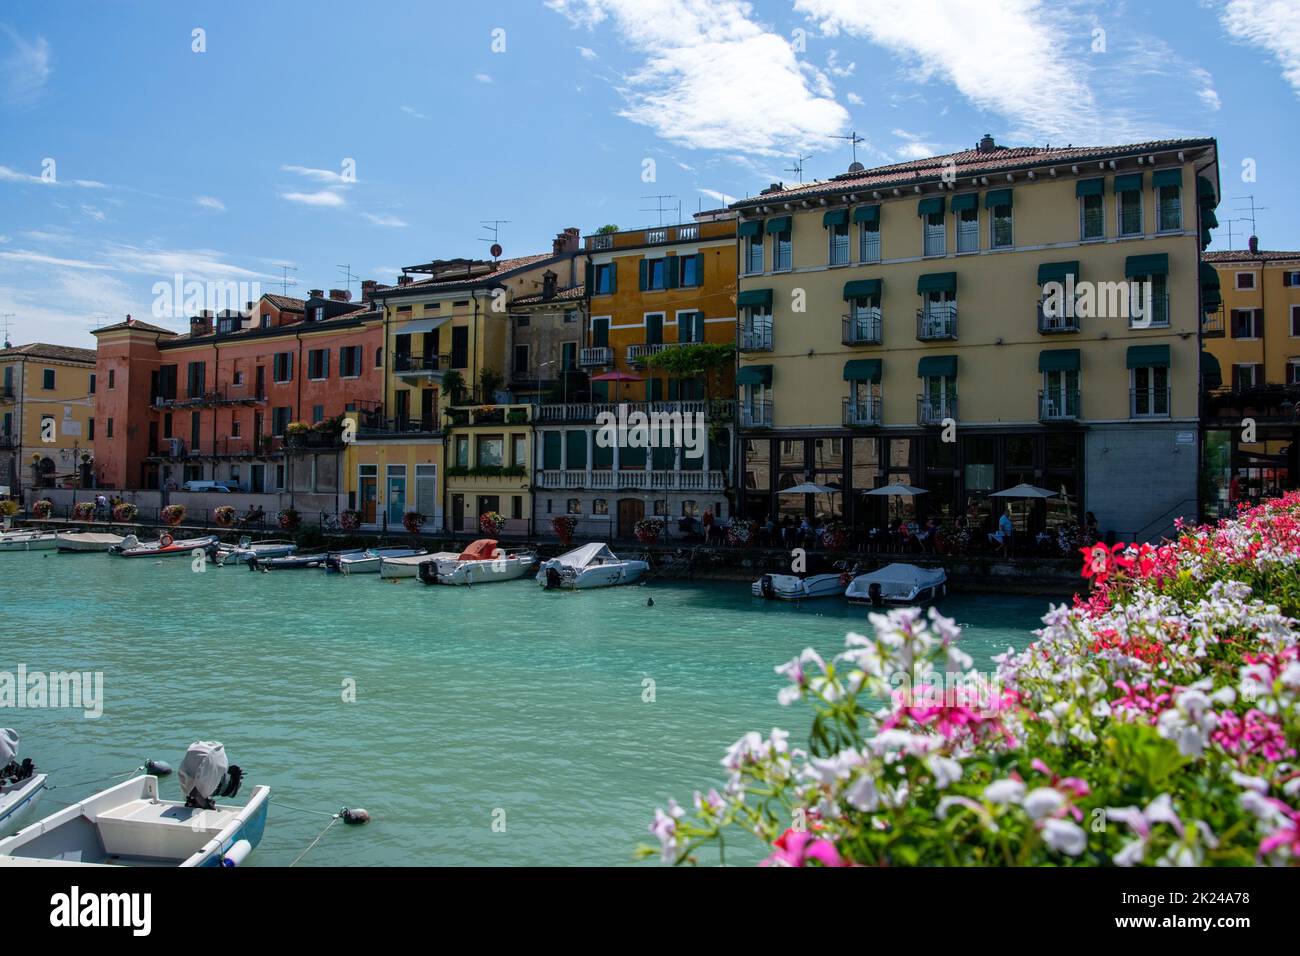 Peschiera del Garda is a town and comune in the province of Verona, in Veneto, Italy. Stock Photo